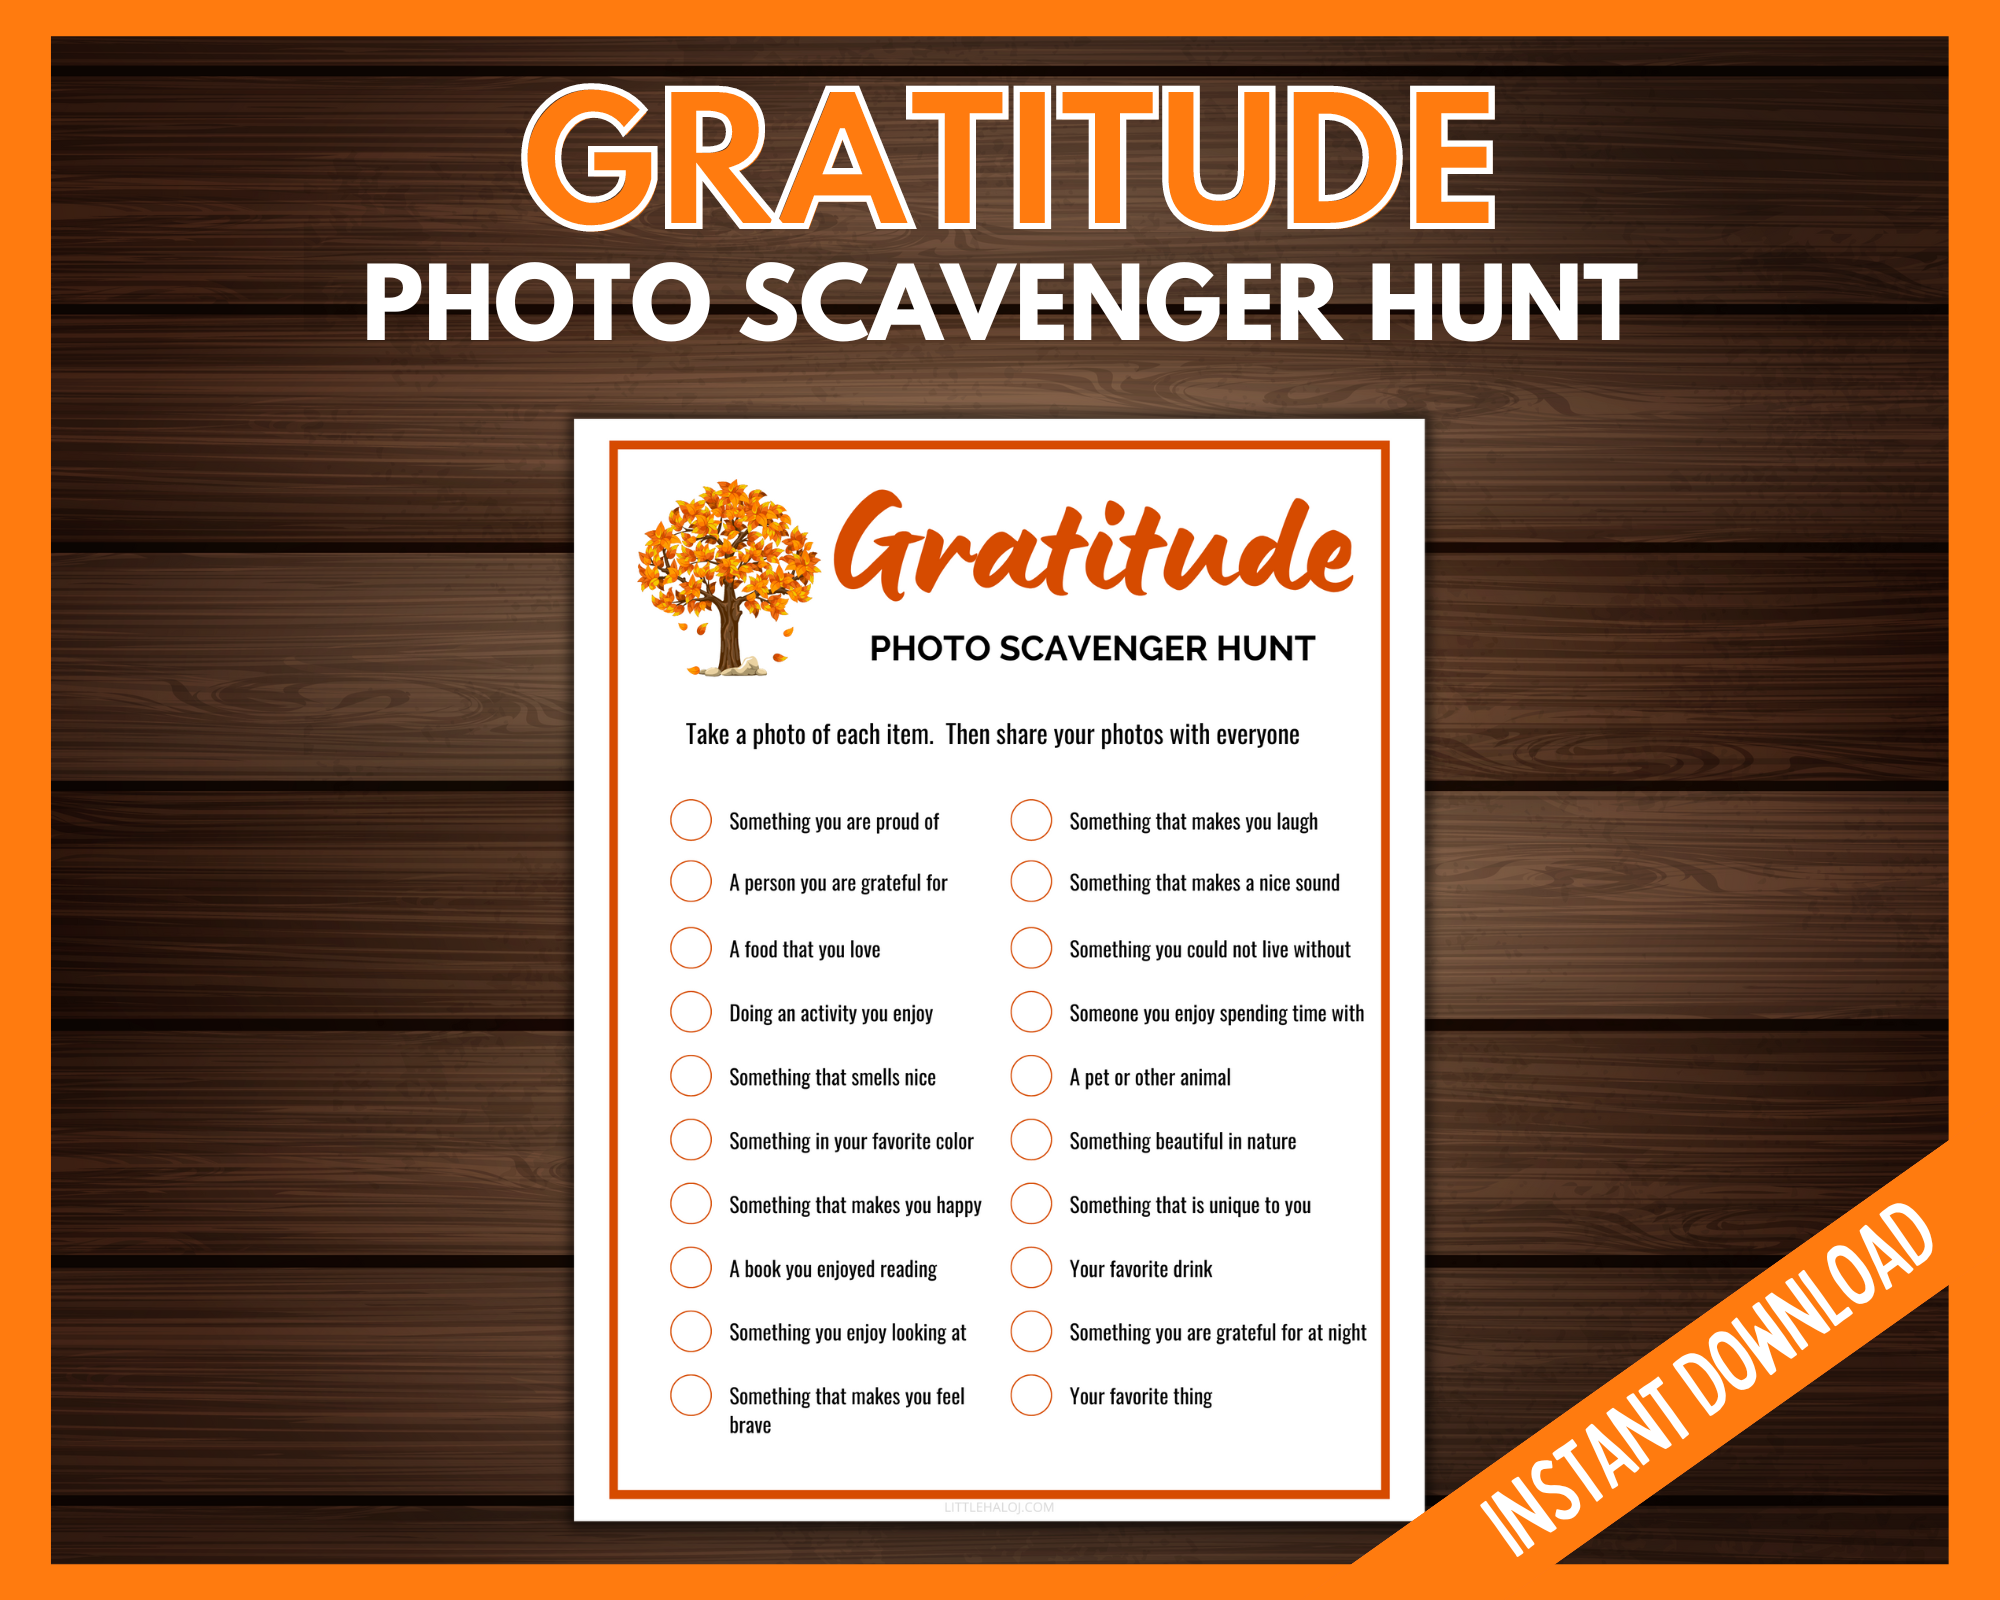 Gratitude Photo Scavenger hunt